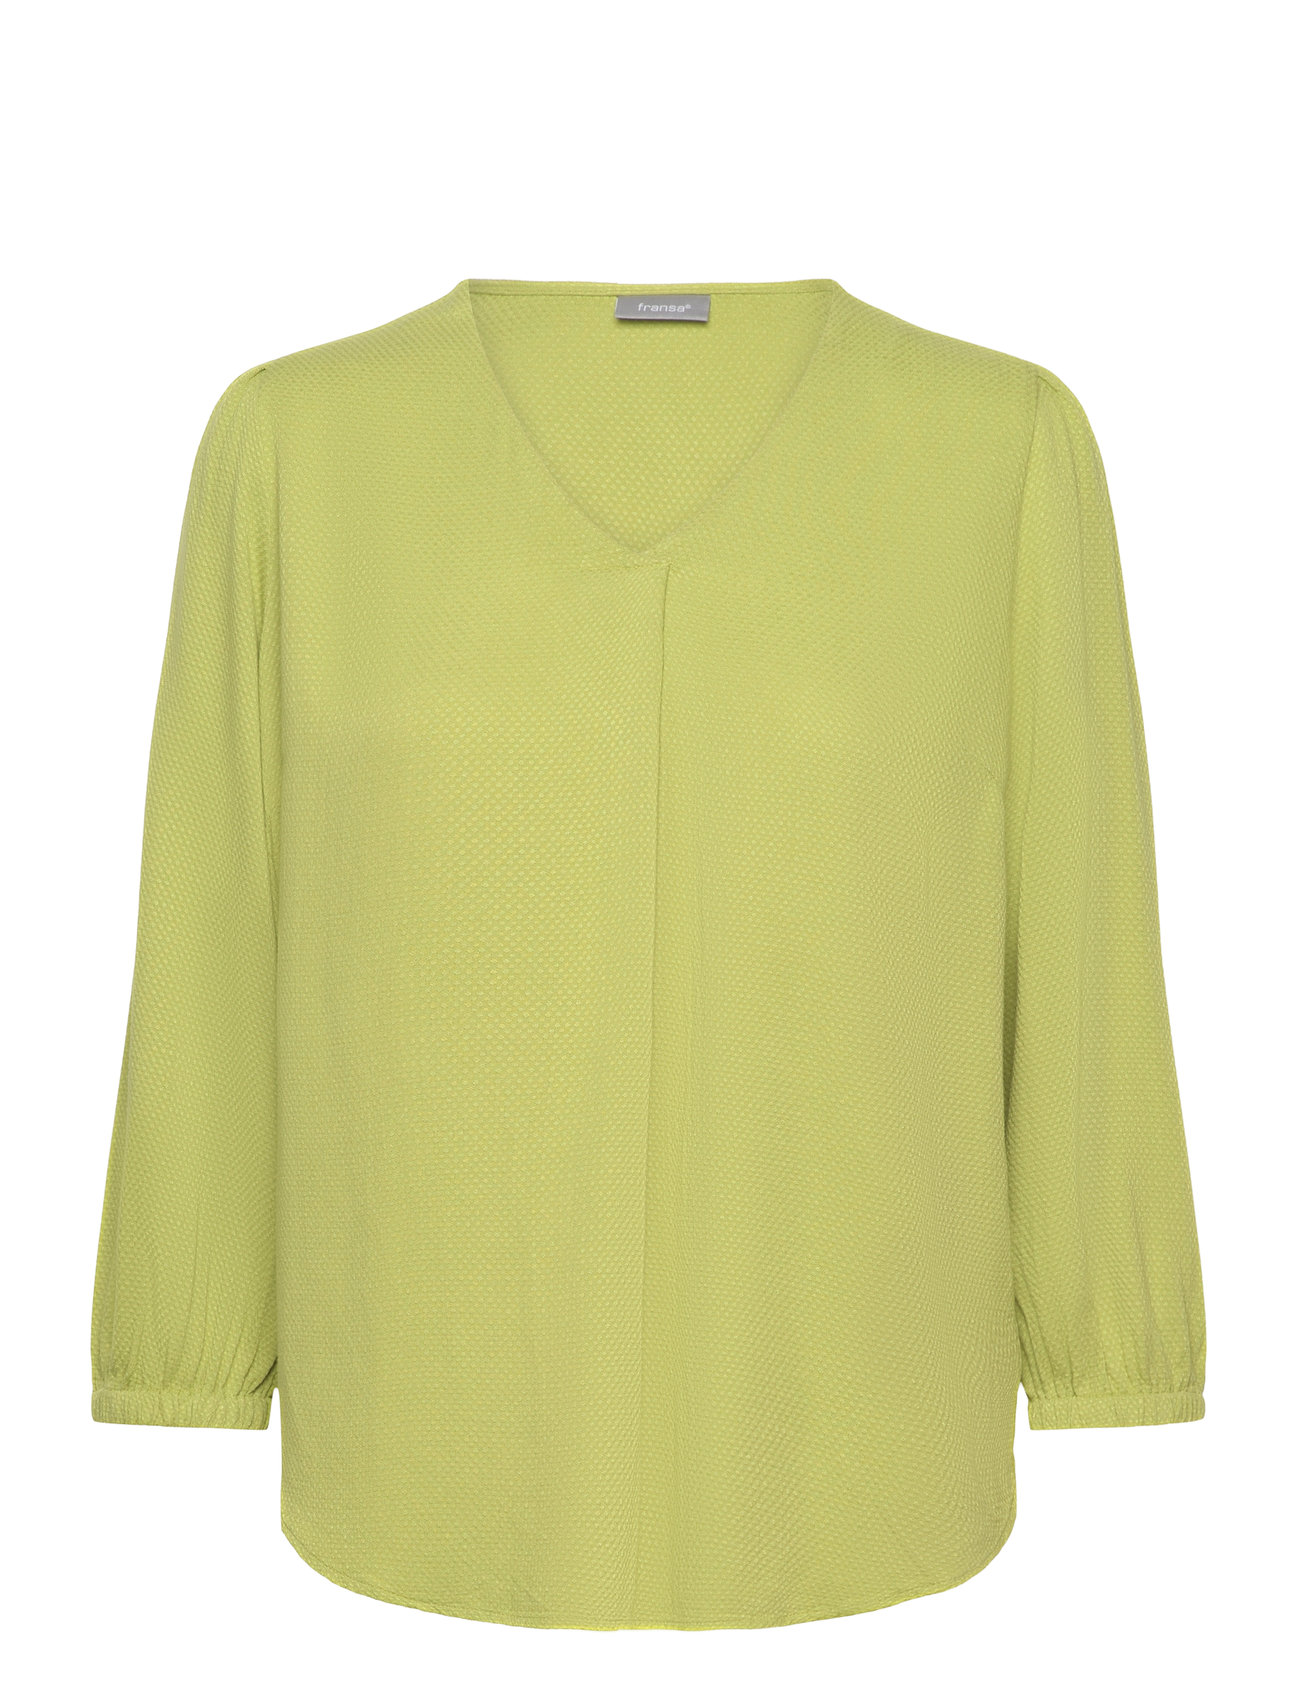 Fransa Frhaide Bl 1 – blouses & shirts – shop at Booztlet